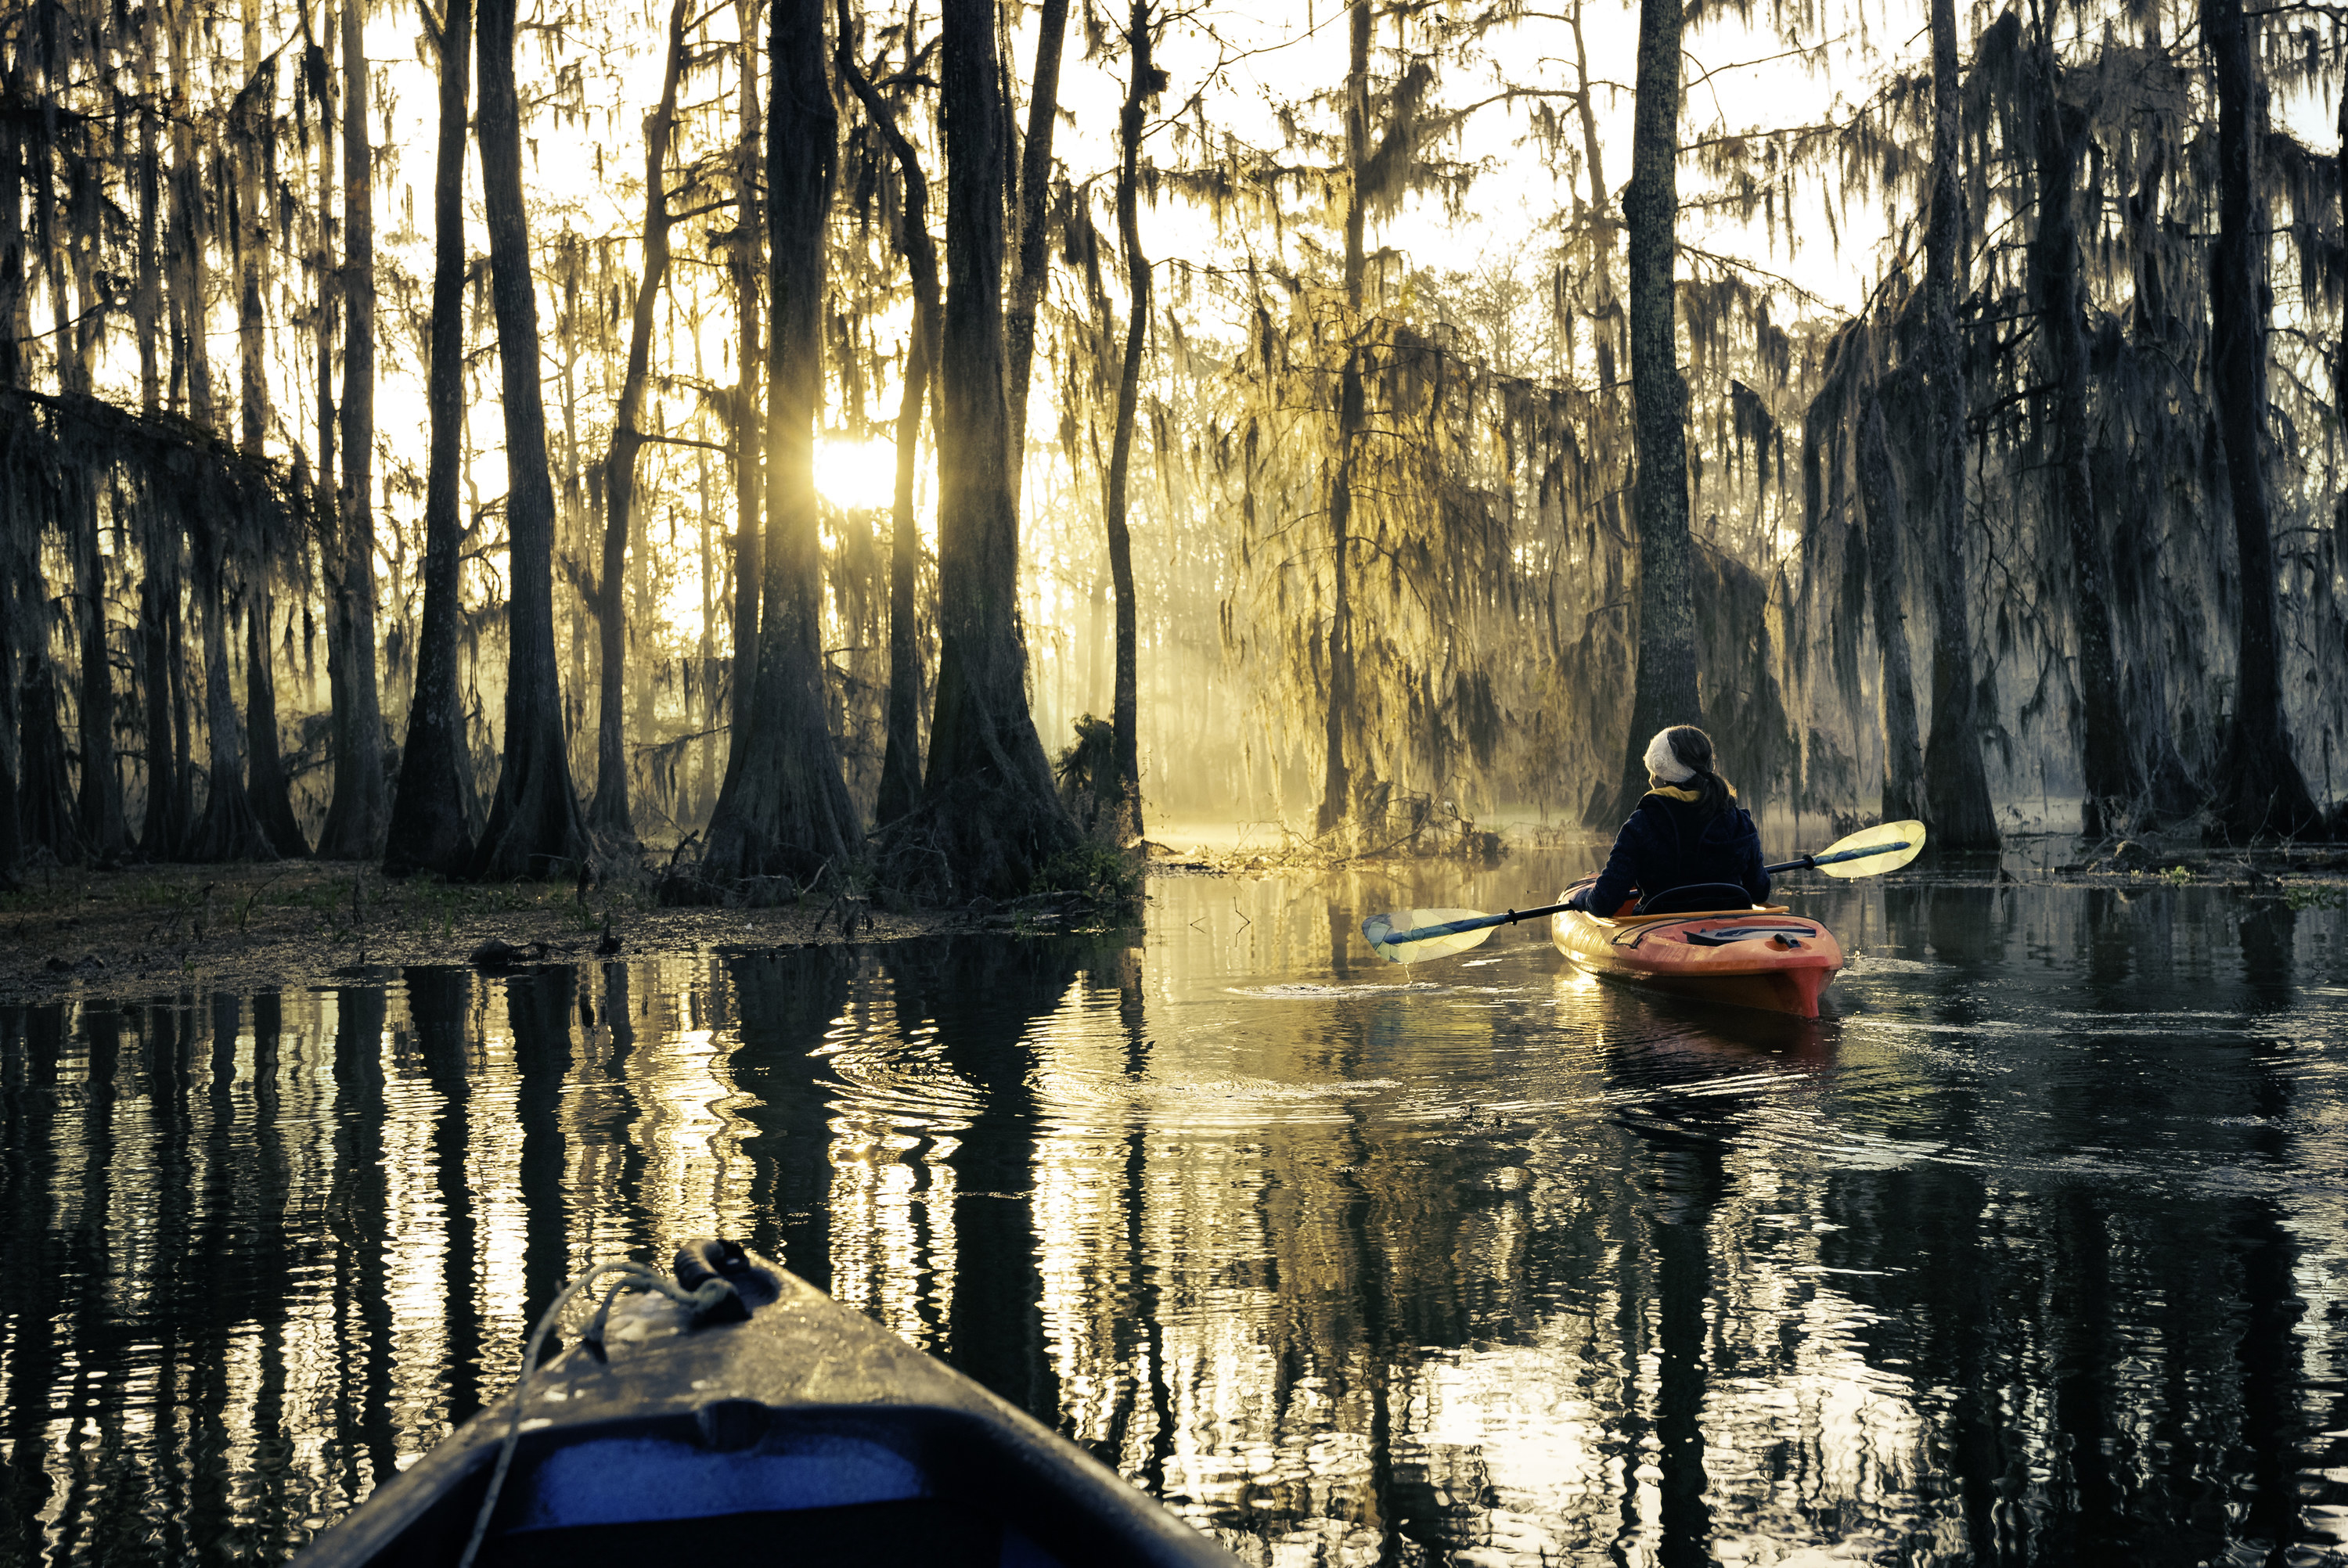 People kayaking in the bayou